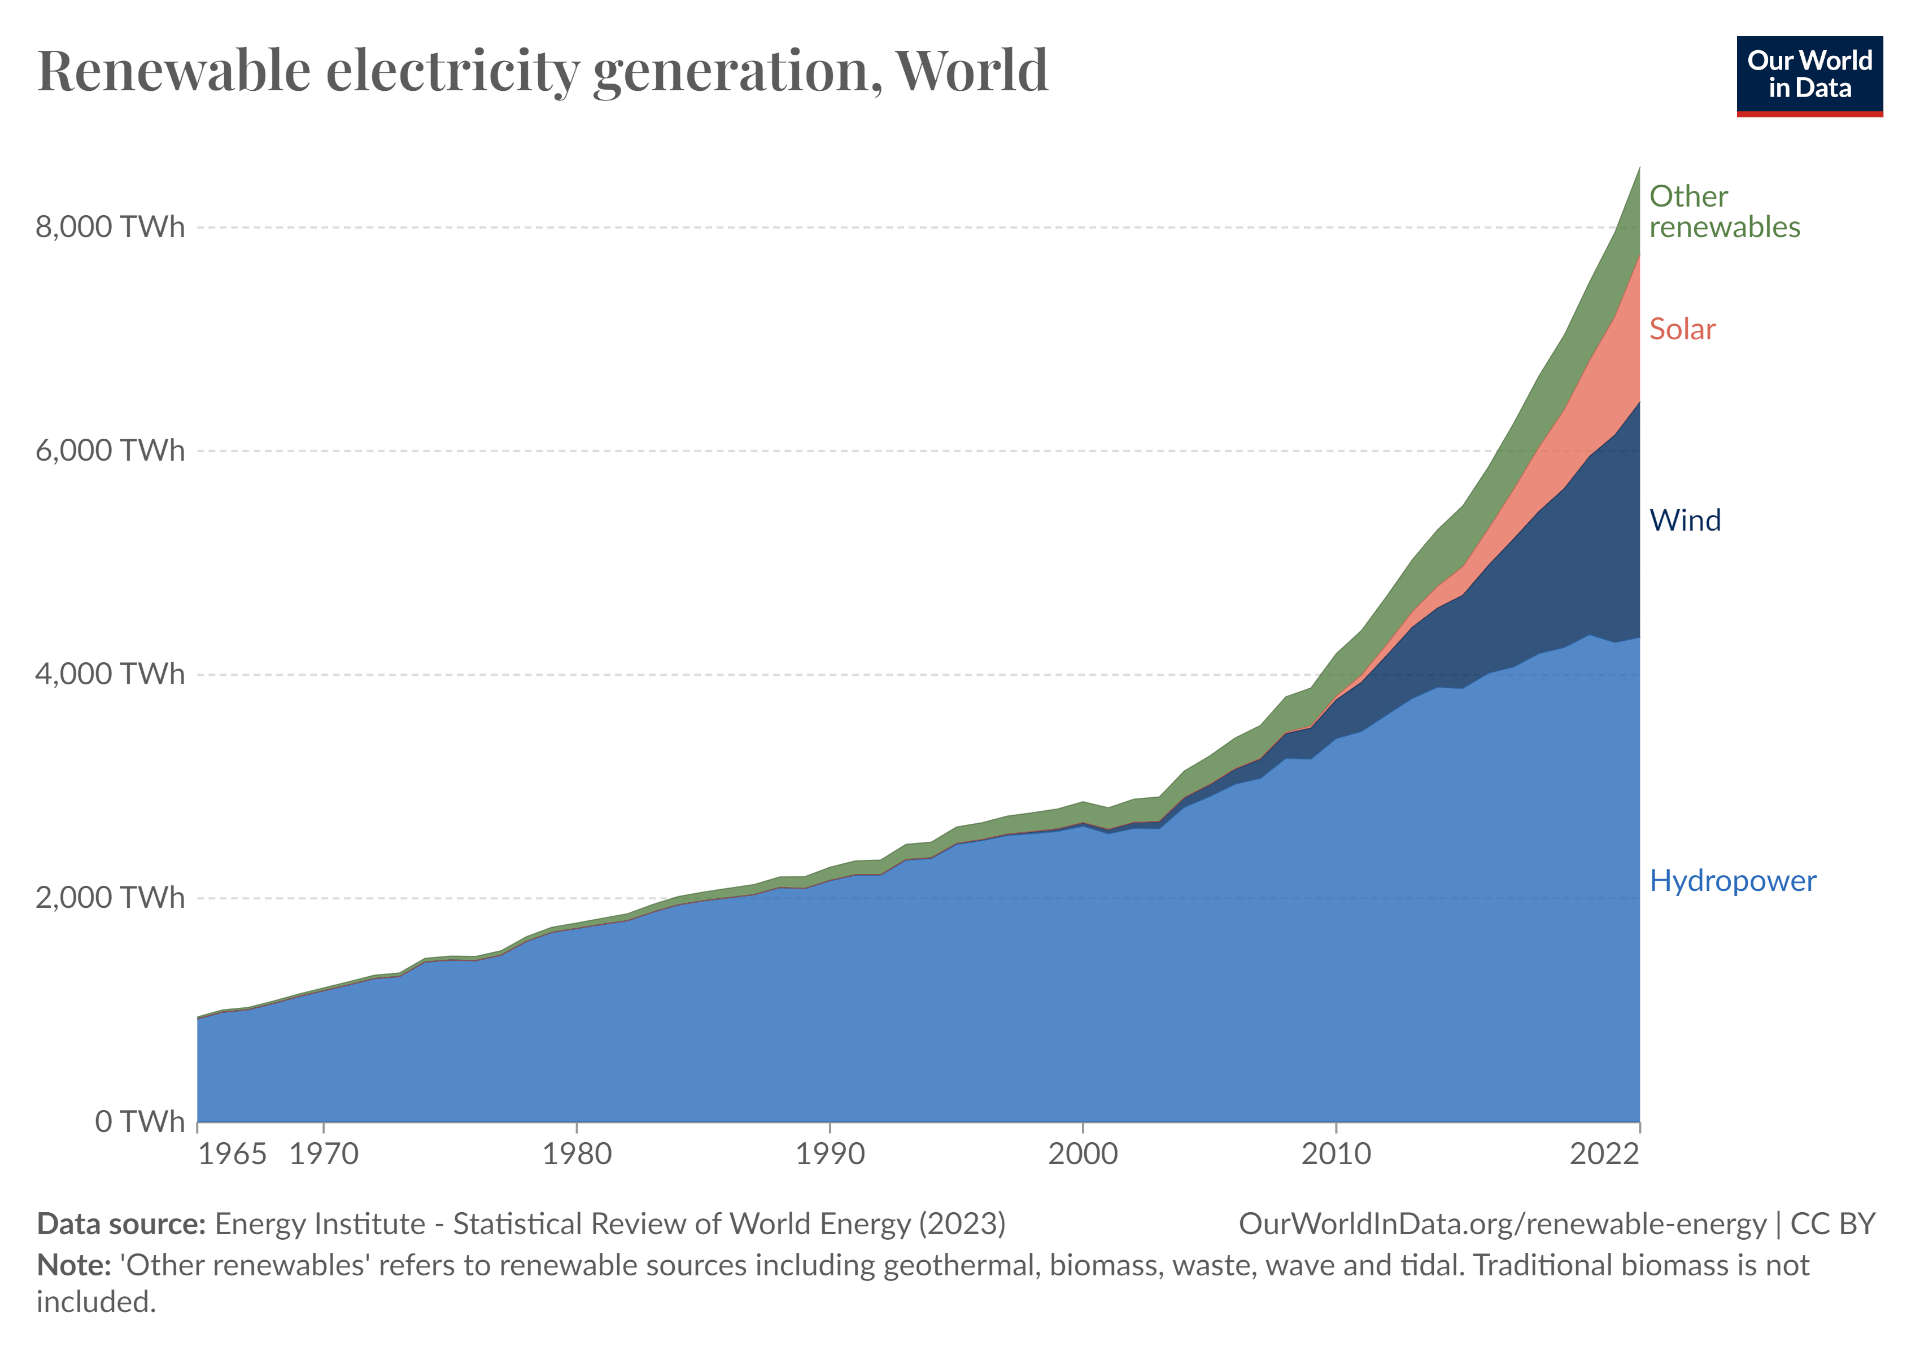 Renewable electricity generation, World (source: ourworldindata.org)